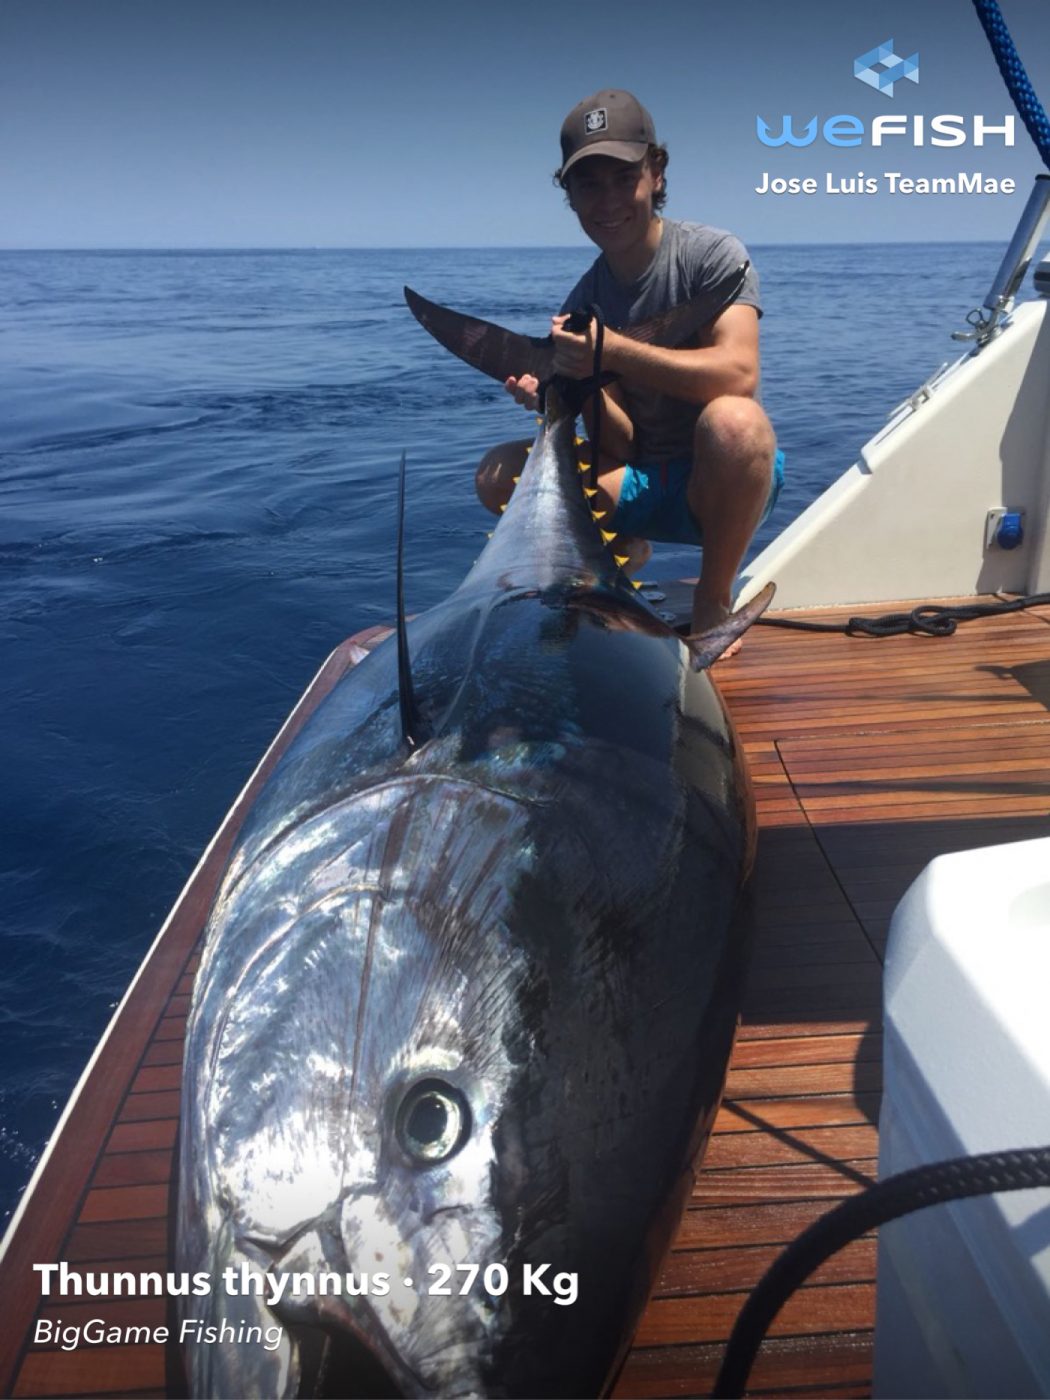 how to catch tuna - wefish